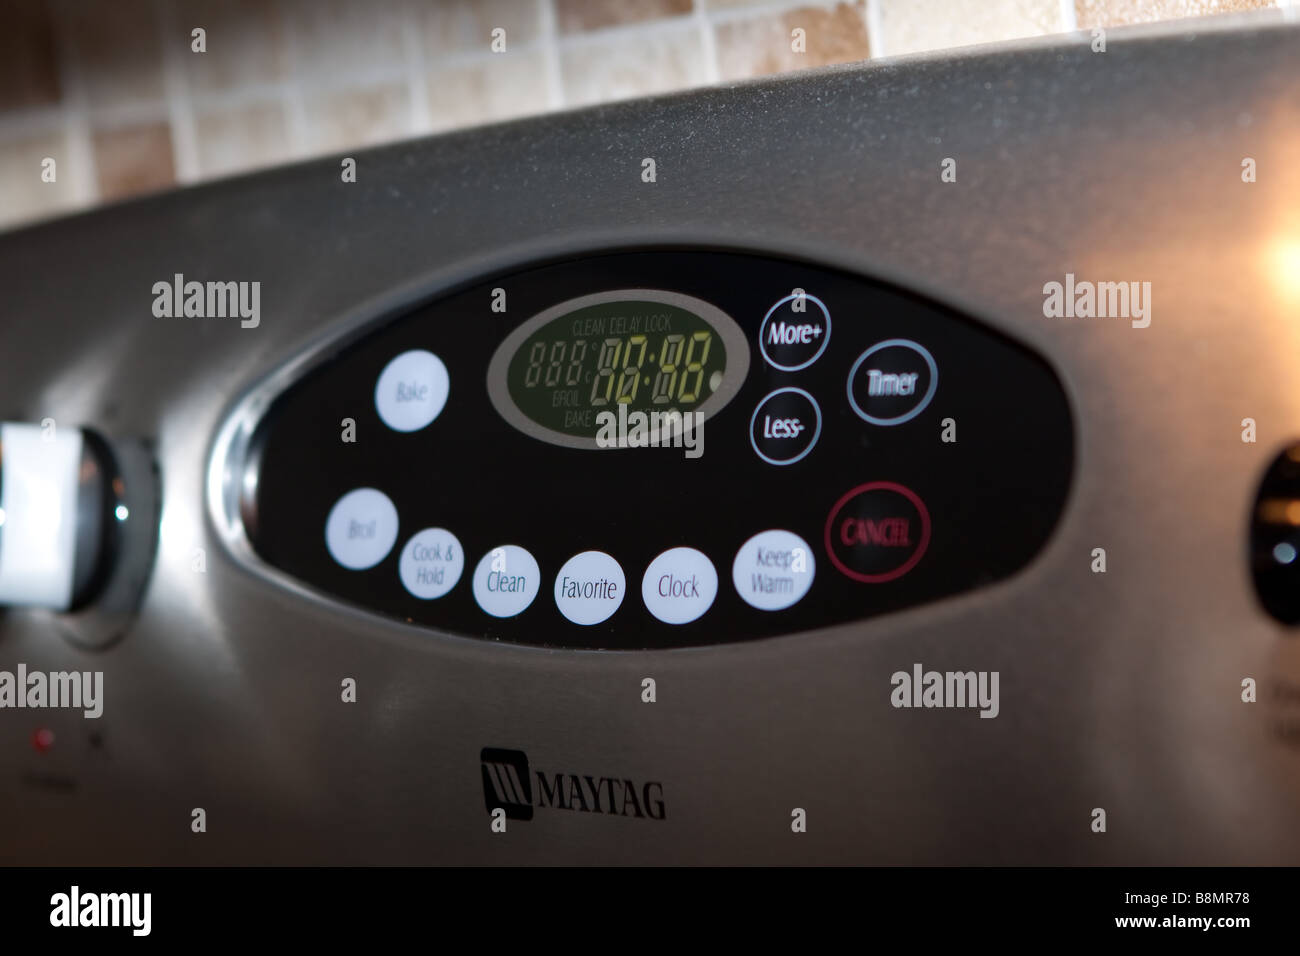 Digital oven controls Stock Photo